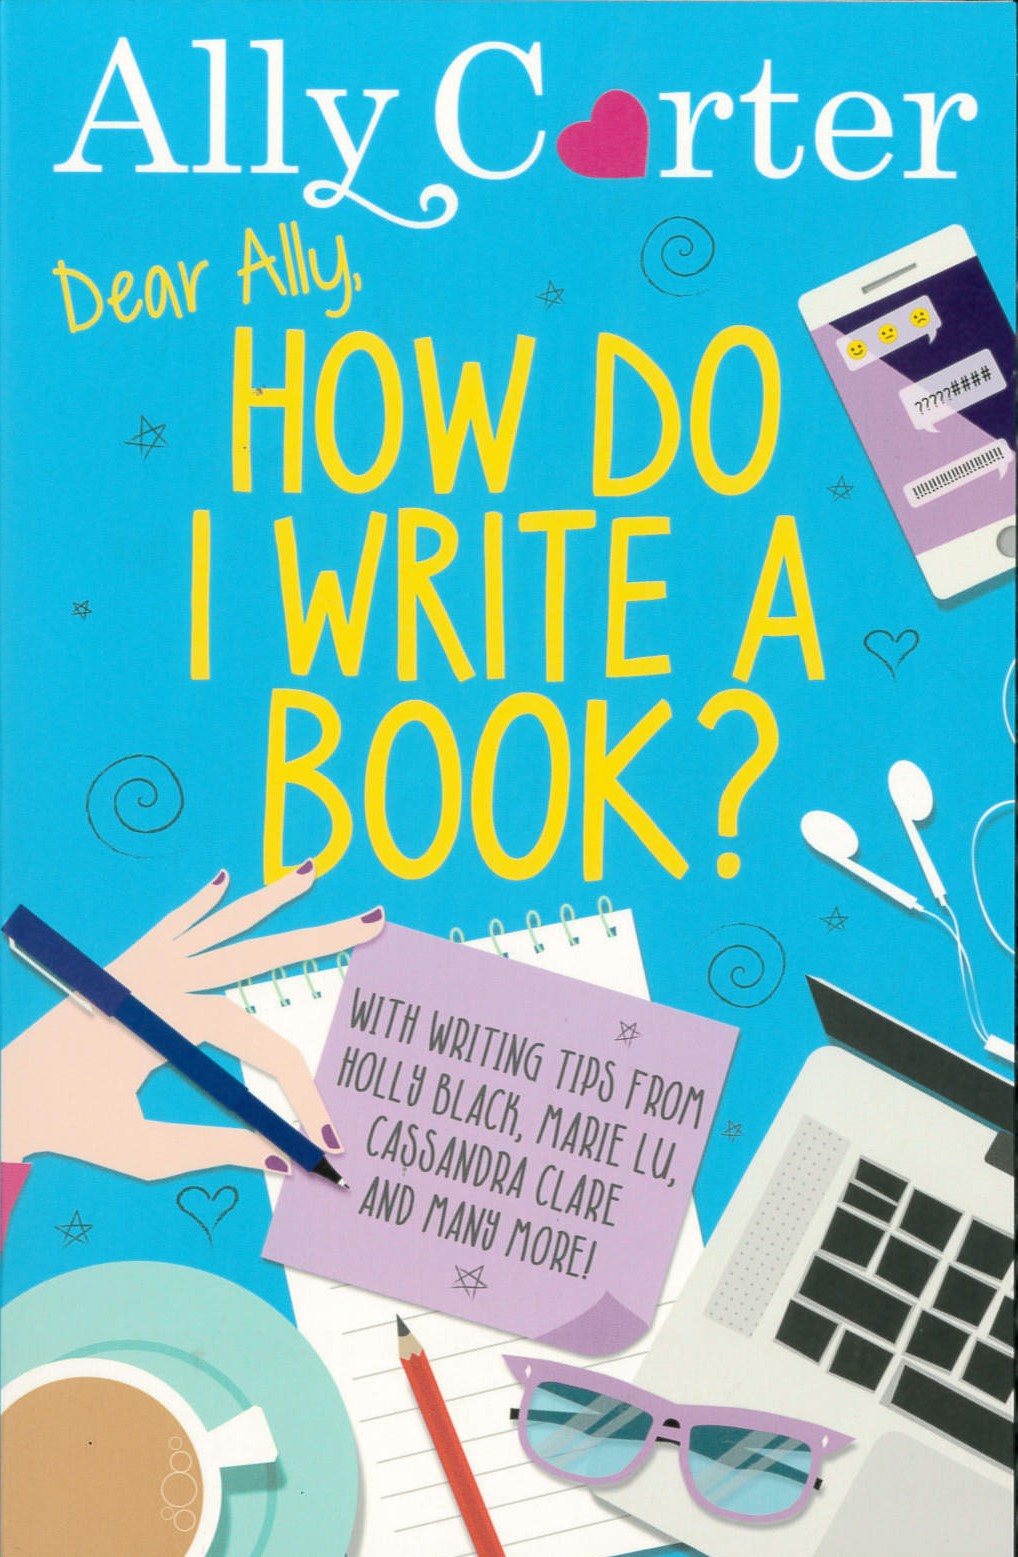 Dear Ally, how do I write a book? /